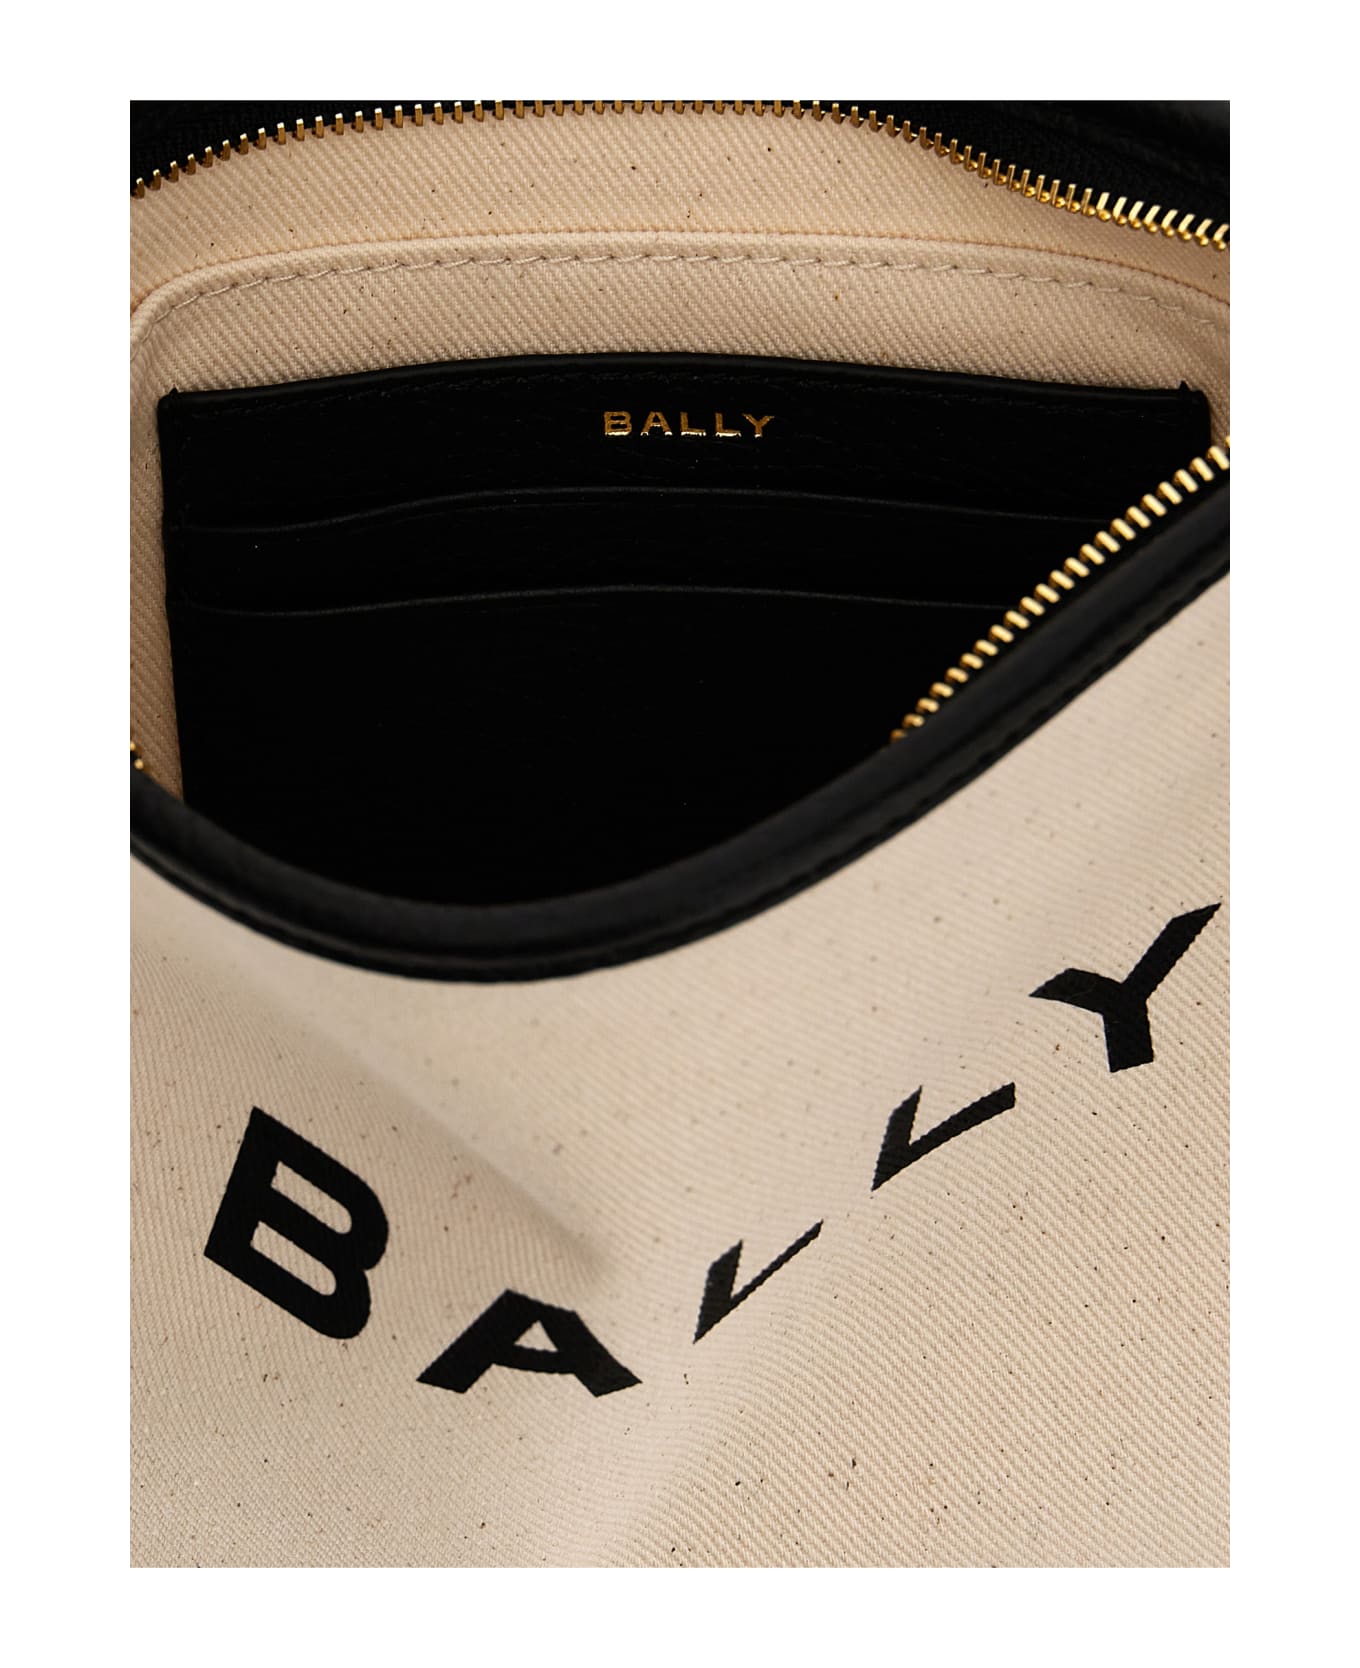 Bally 'bar' Clutch - White/Black